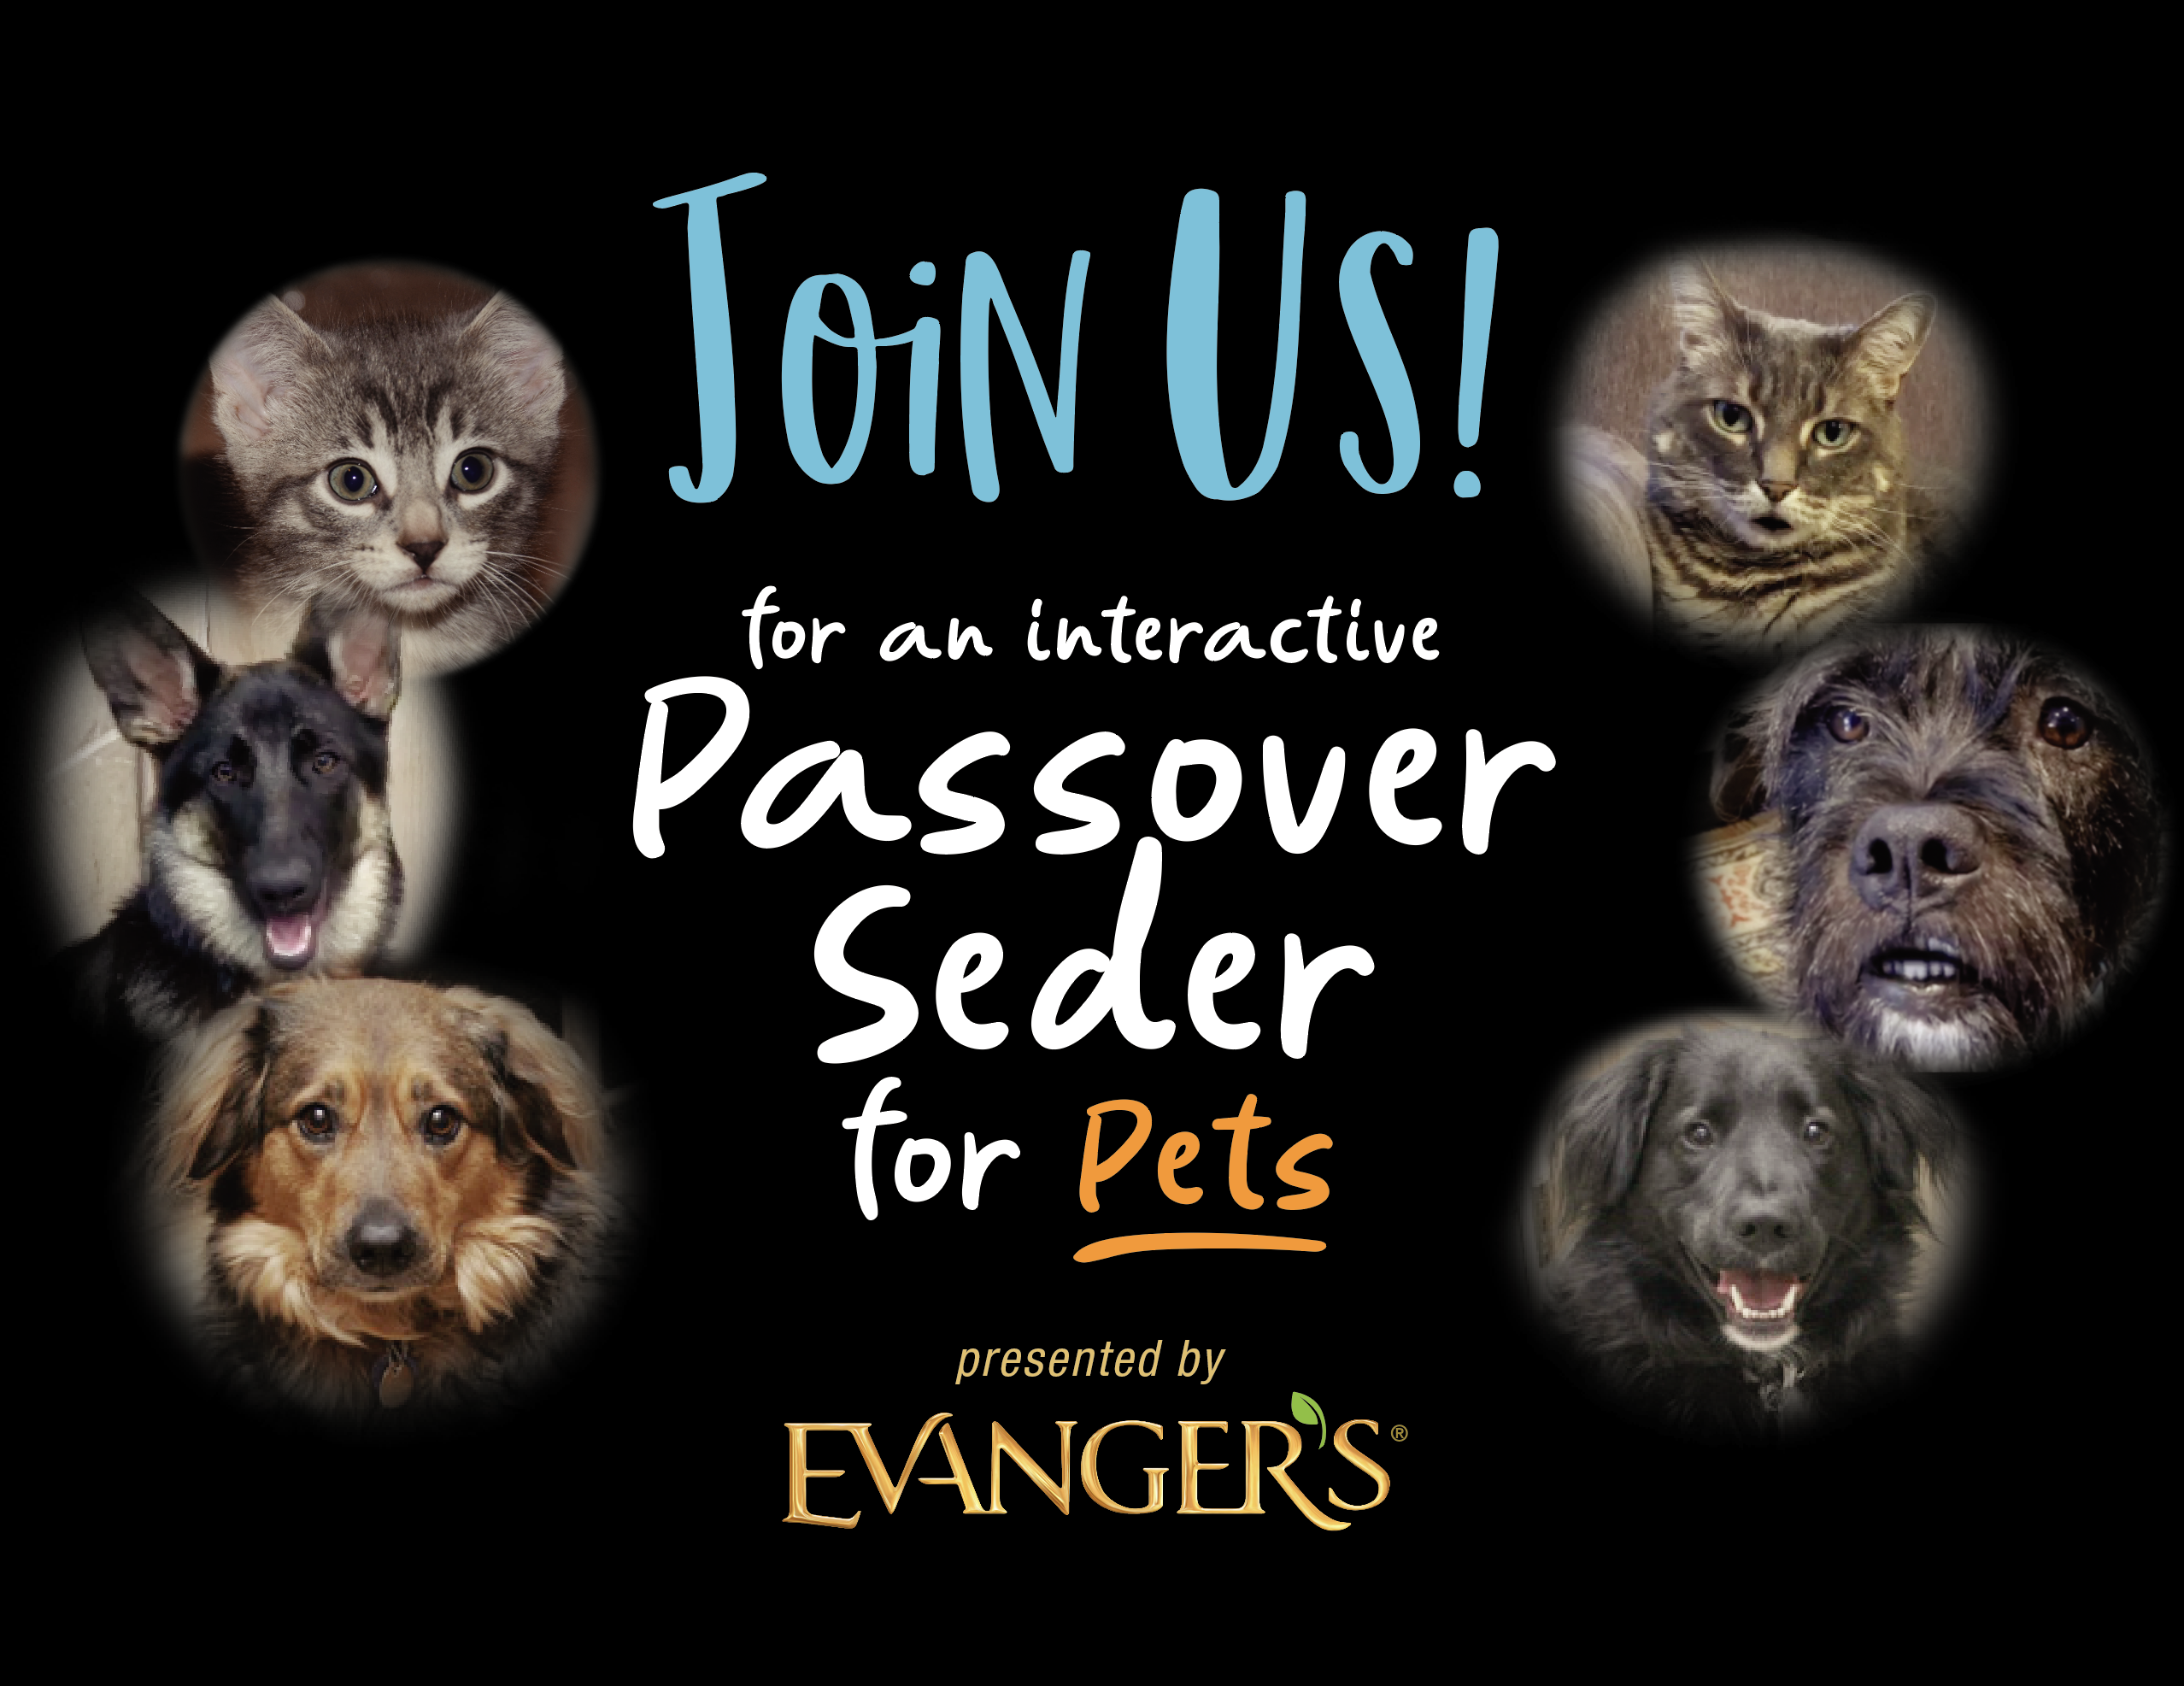 Evangers Global Passover Seder #EvangersPetPassover2020